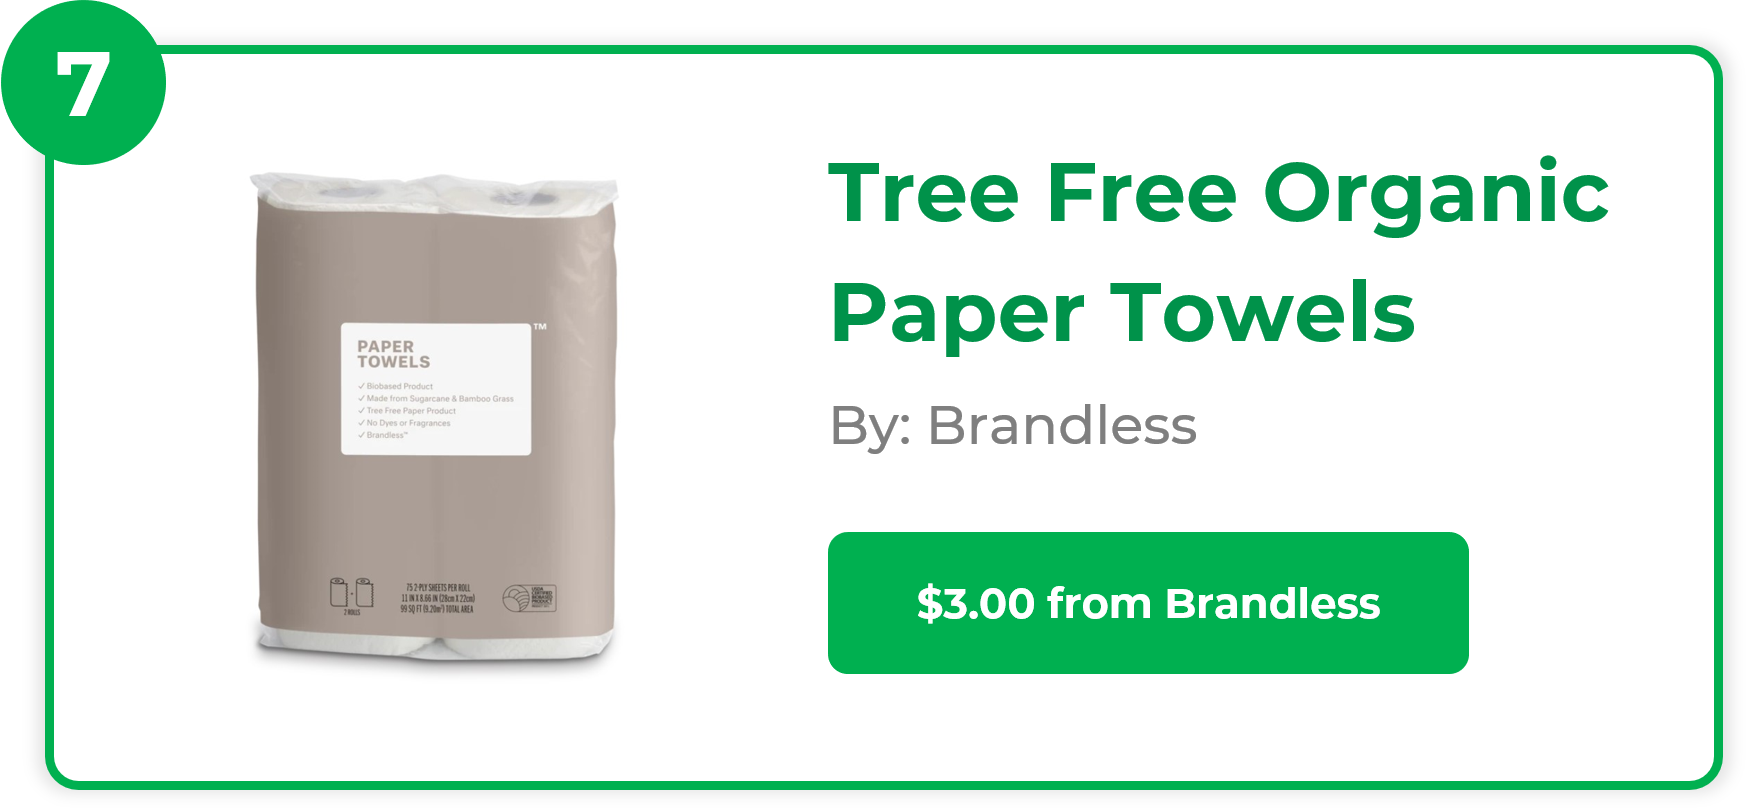 Tree Free Organic Paper Towels - Brandless